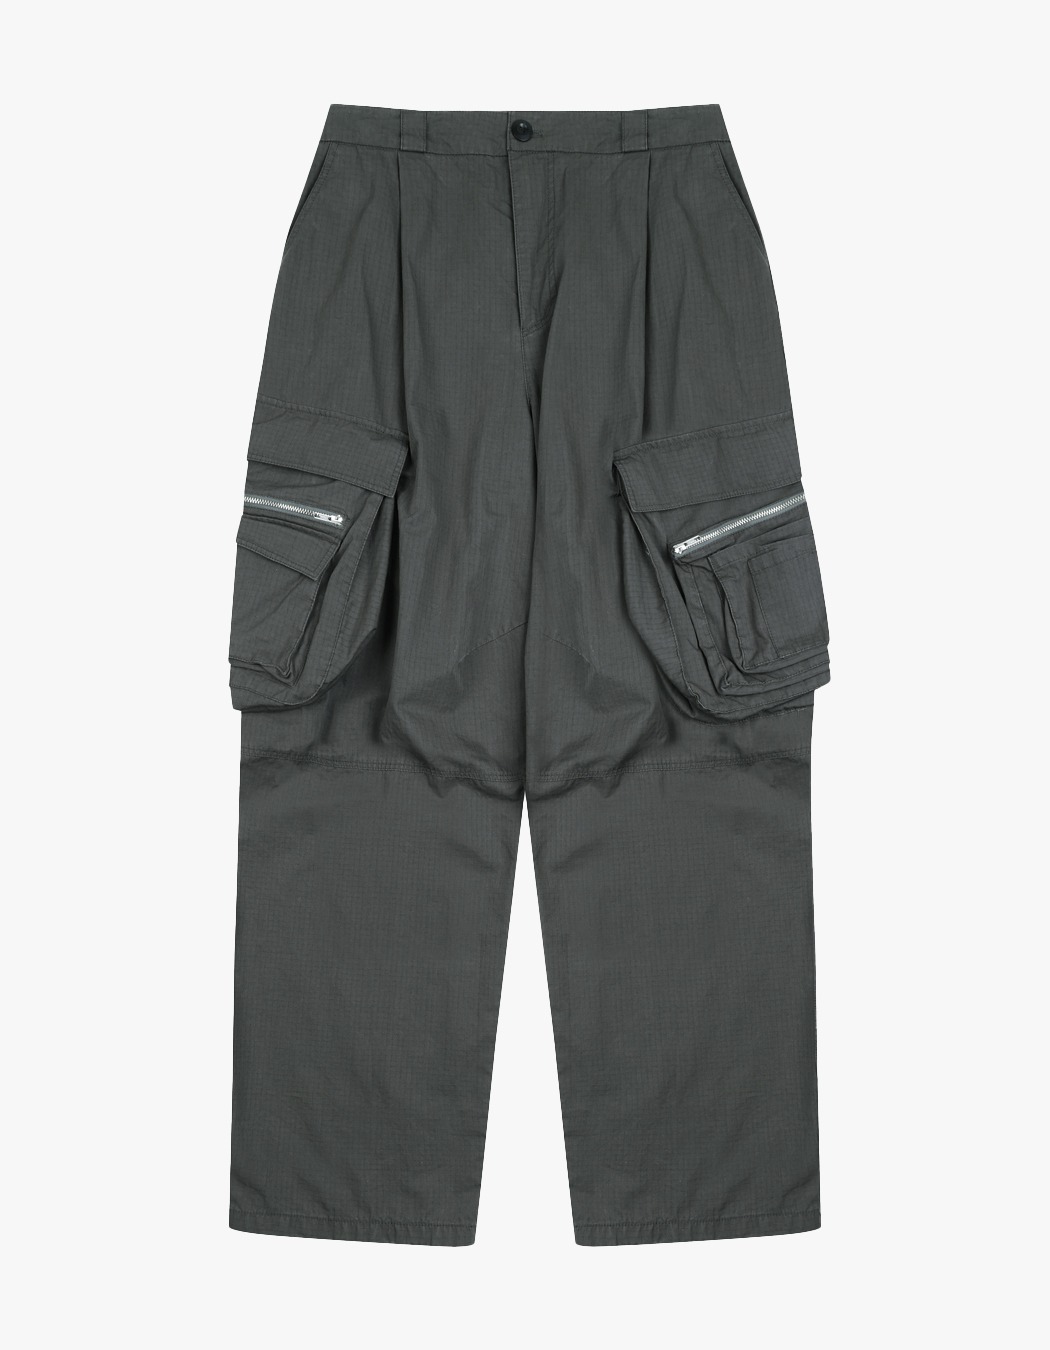 GRAILZ Oval Large Fit Cargo Pants - Grey | International Store